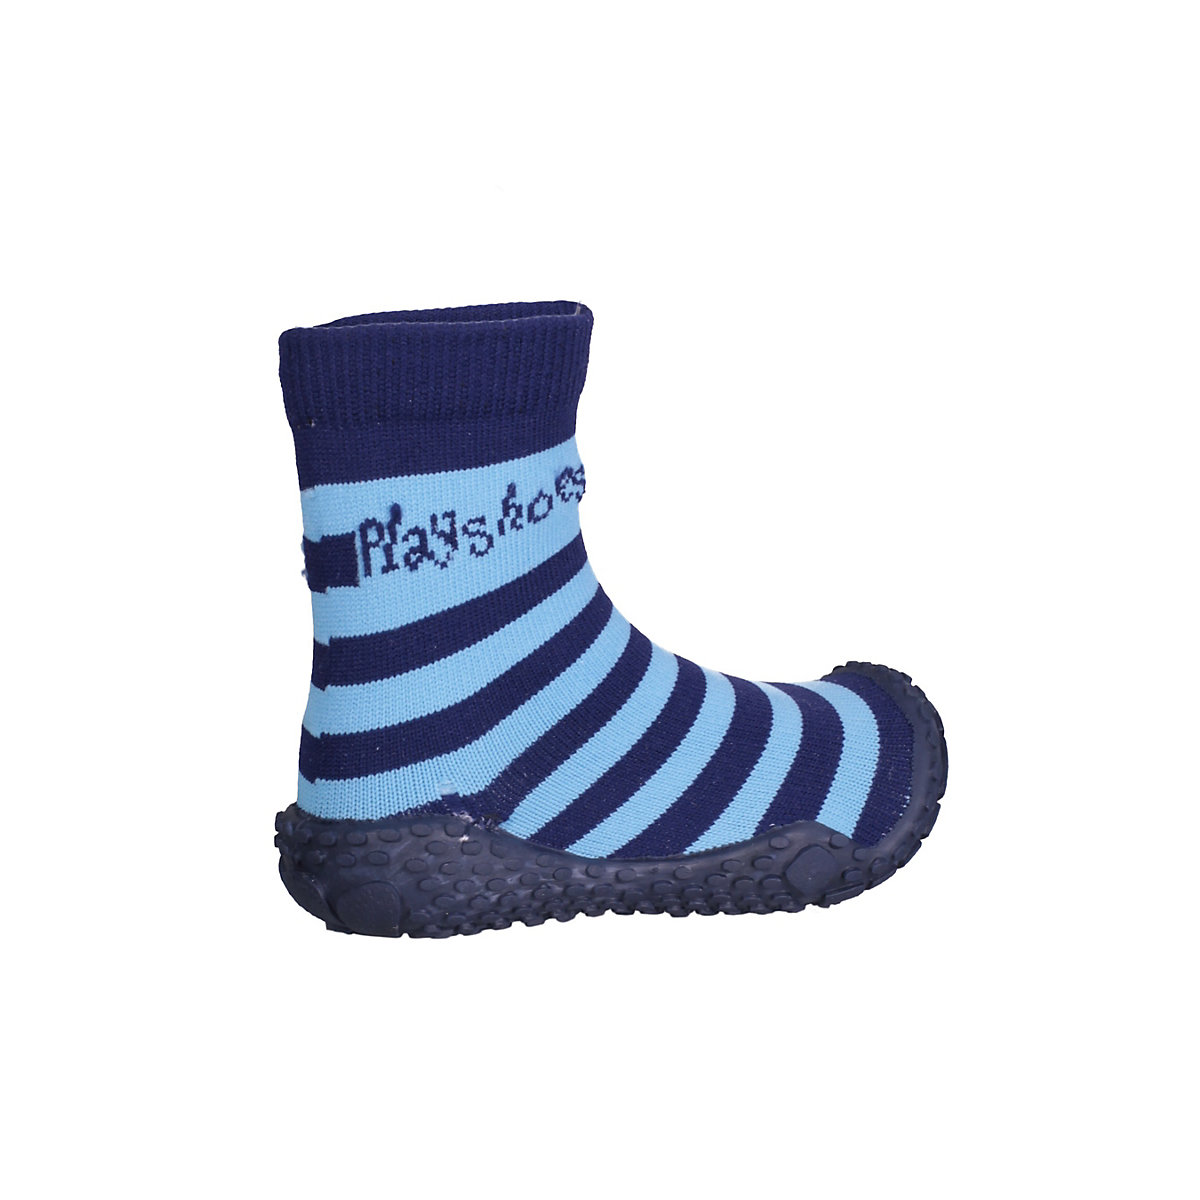 Playshoes Aqua-Socke Streifen Badeschuhe für Jungen blau-kombi